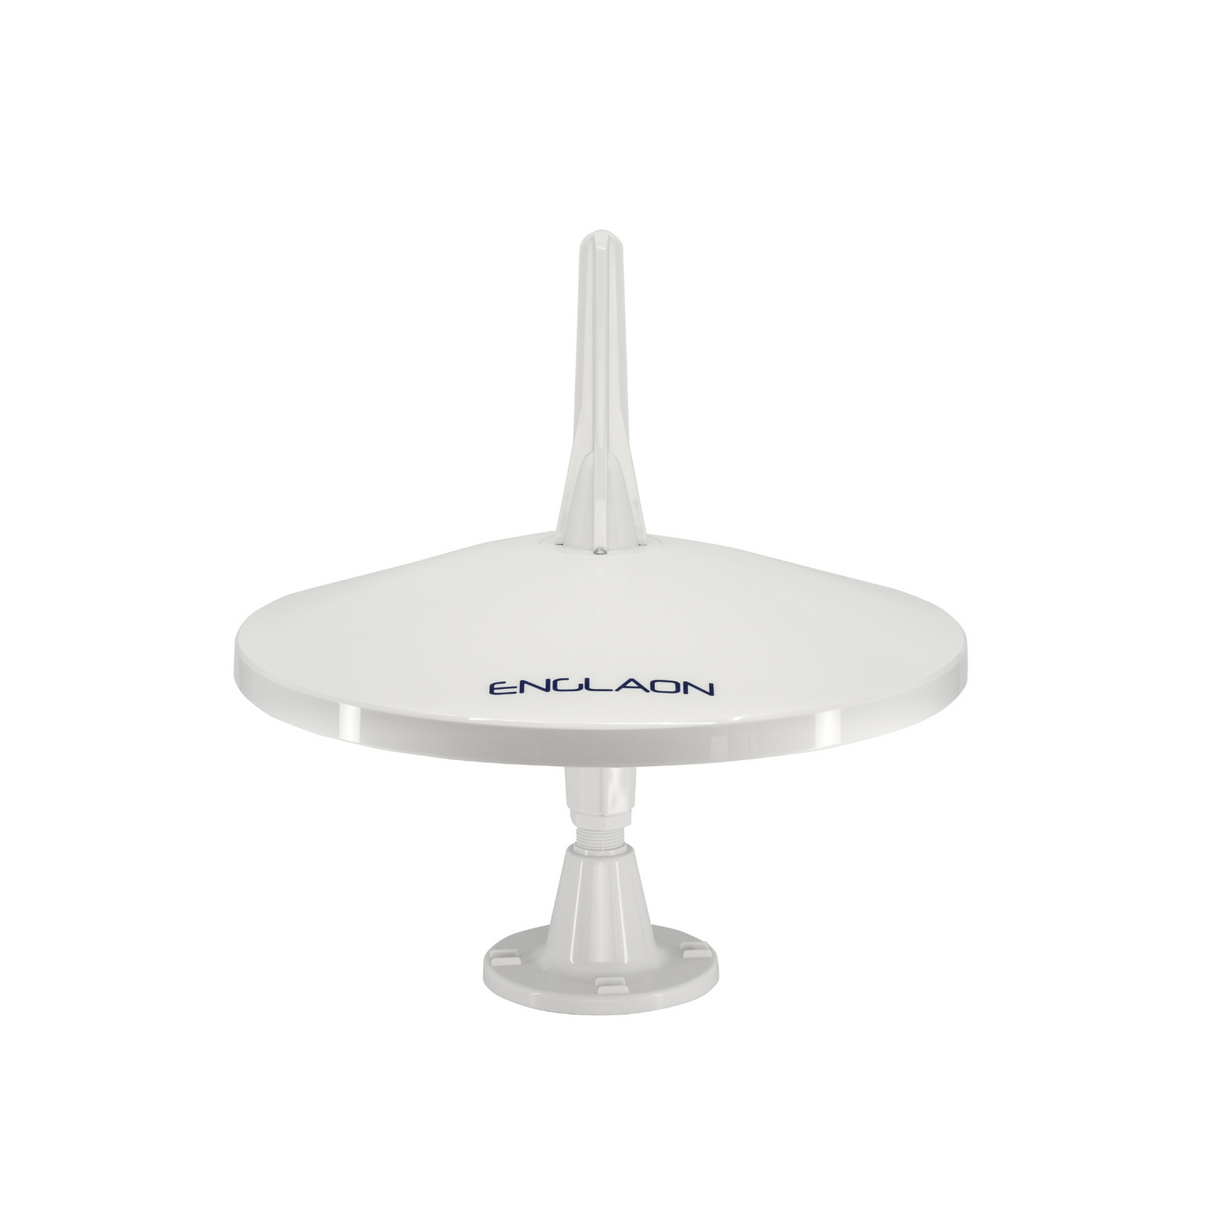 ENGLAON 360° OMNI Directional DTV Antenna, Extra Vertical Antenna for 720° reception